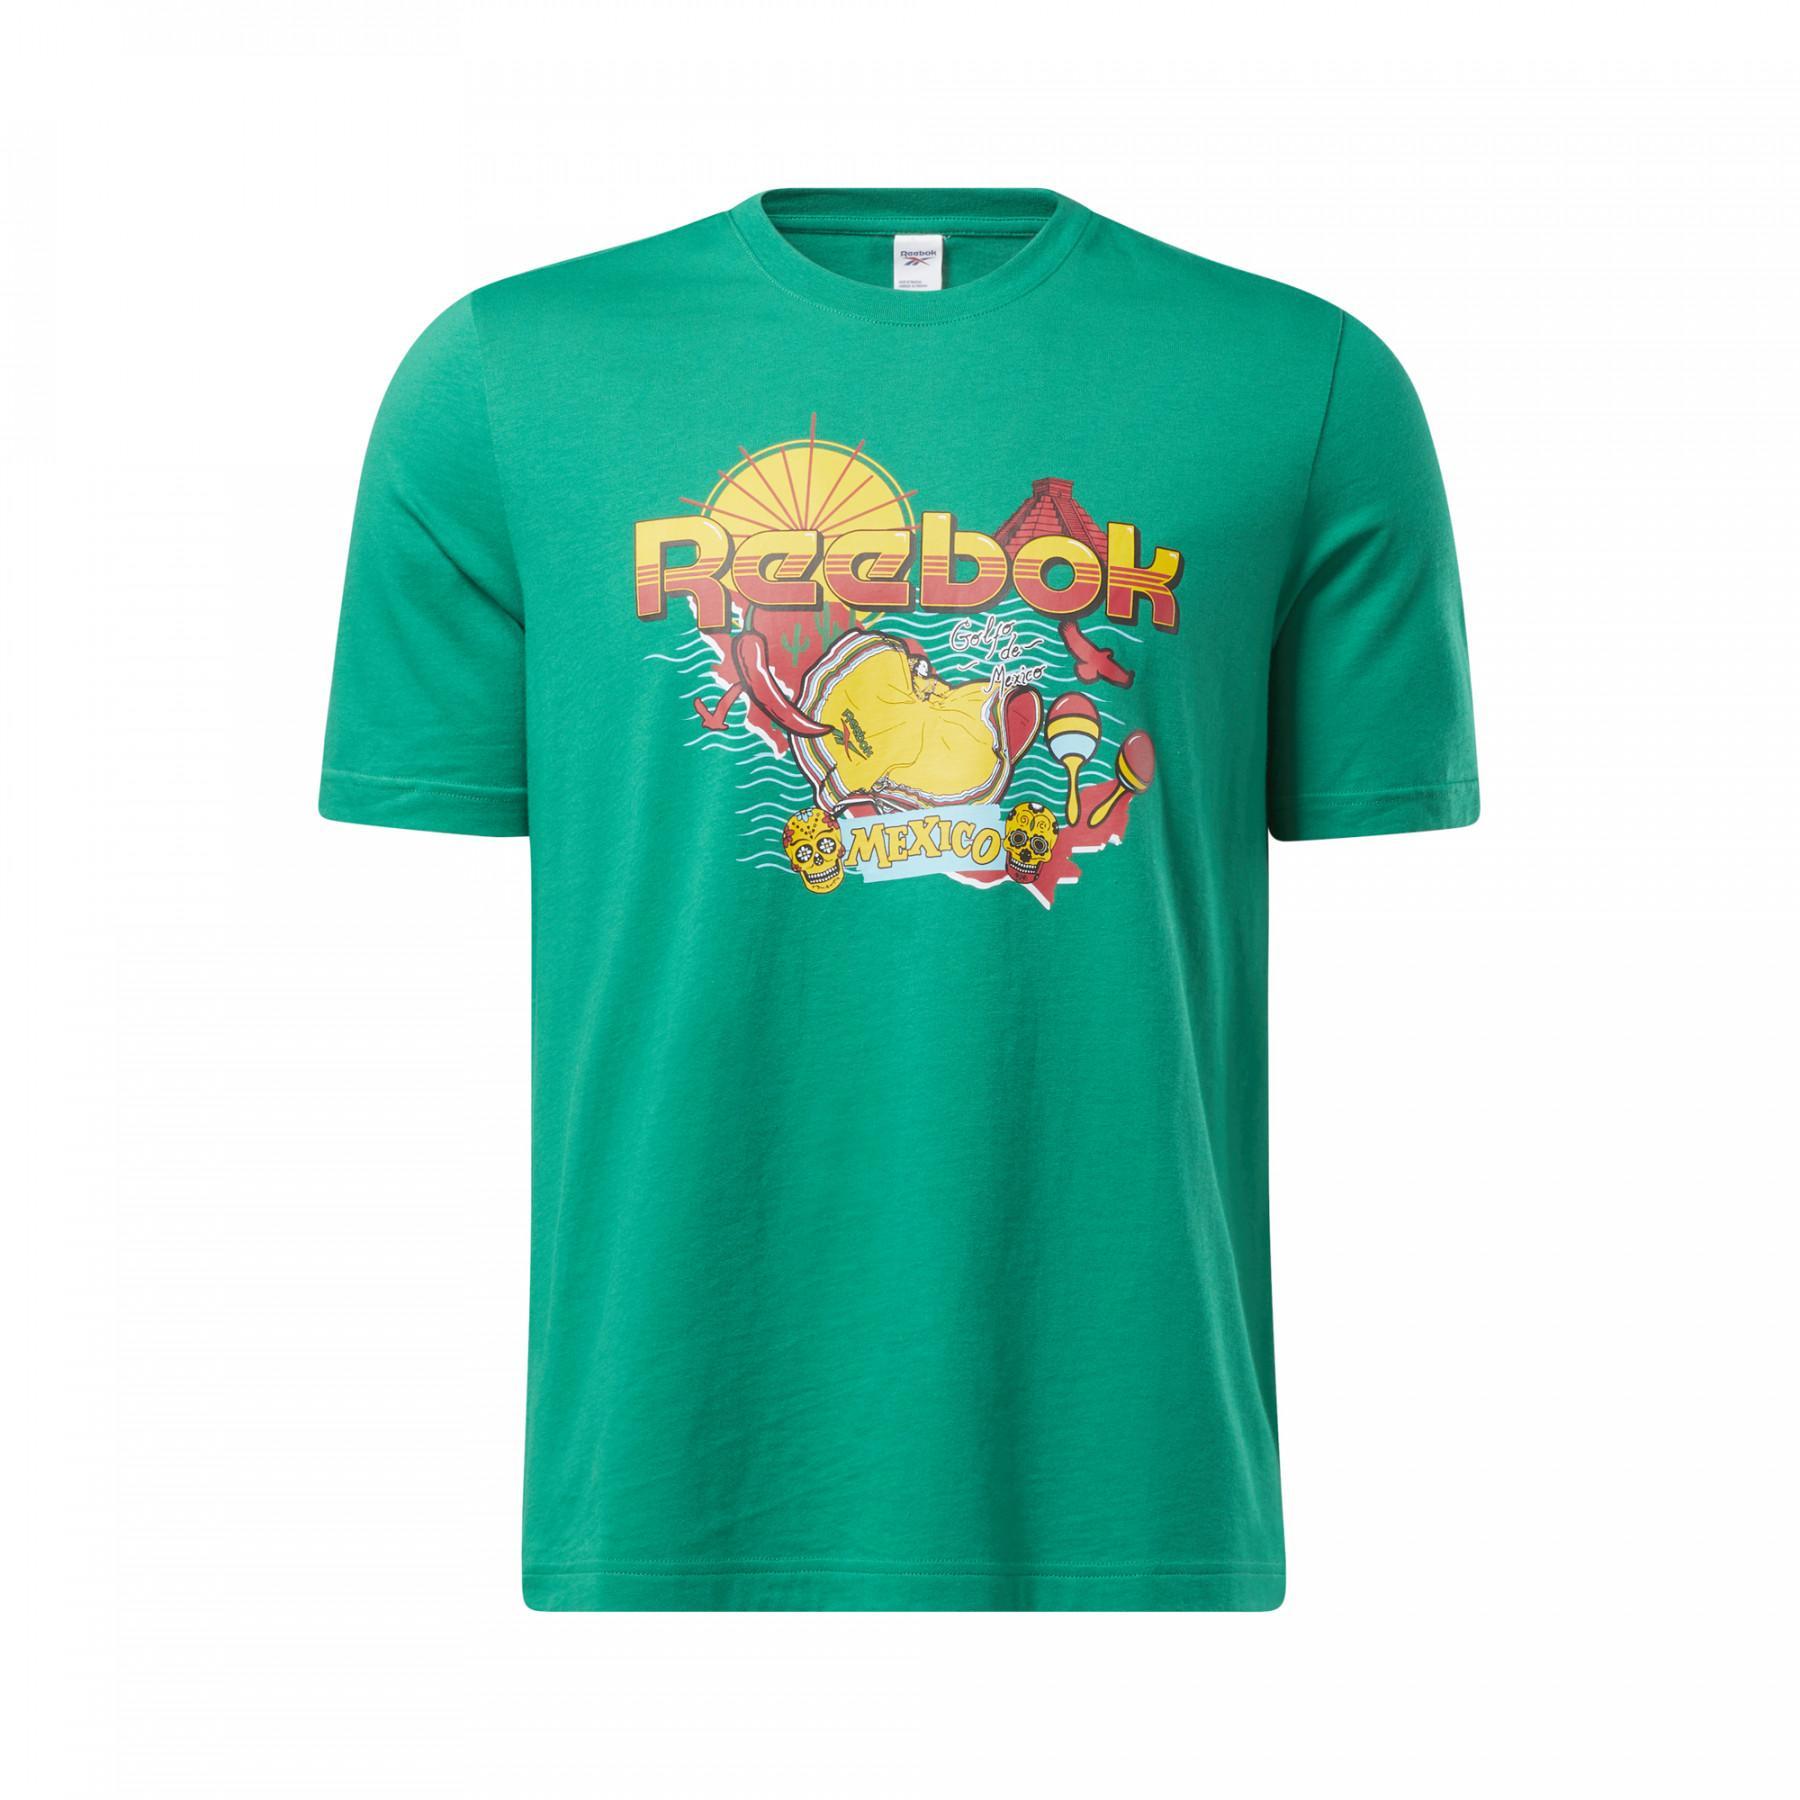 Camiseta Reebok Classics